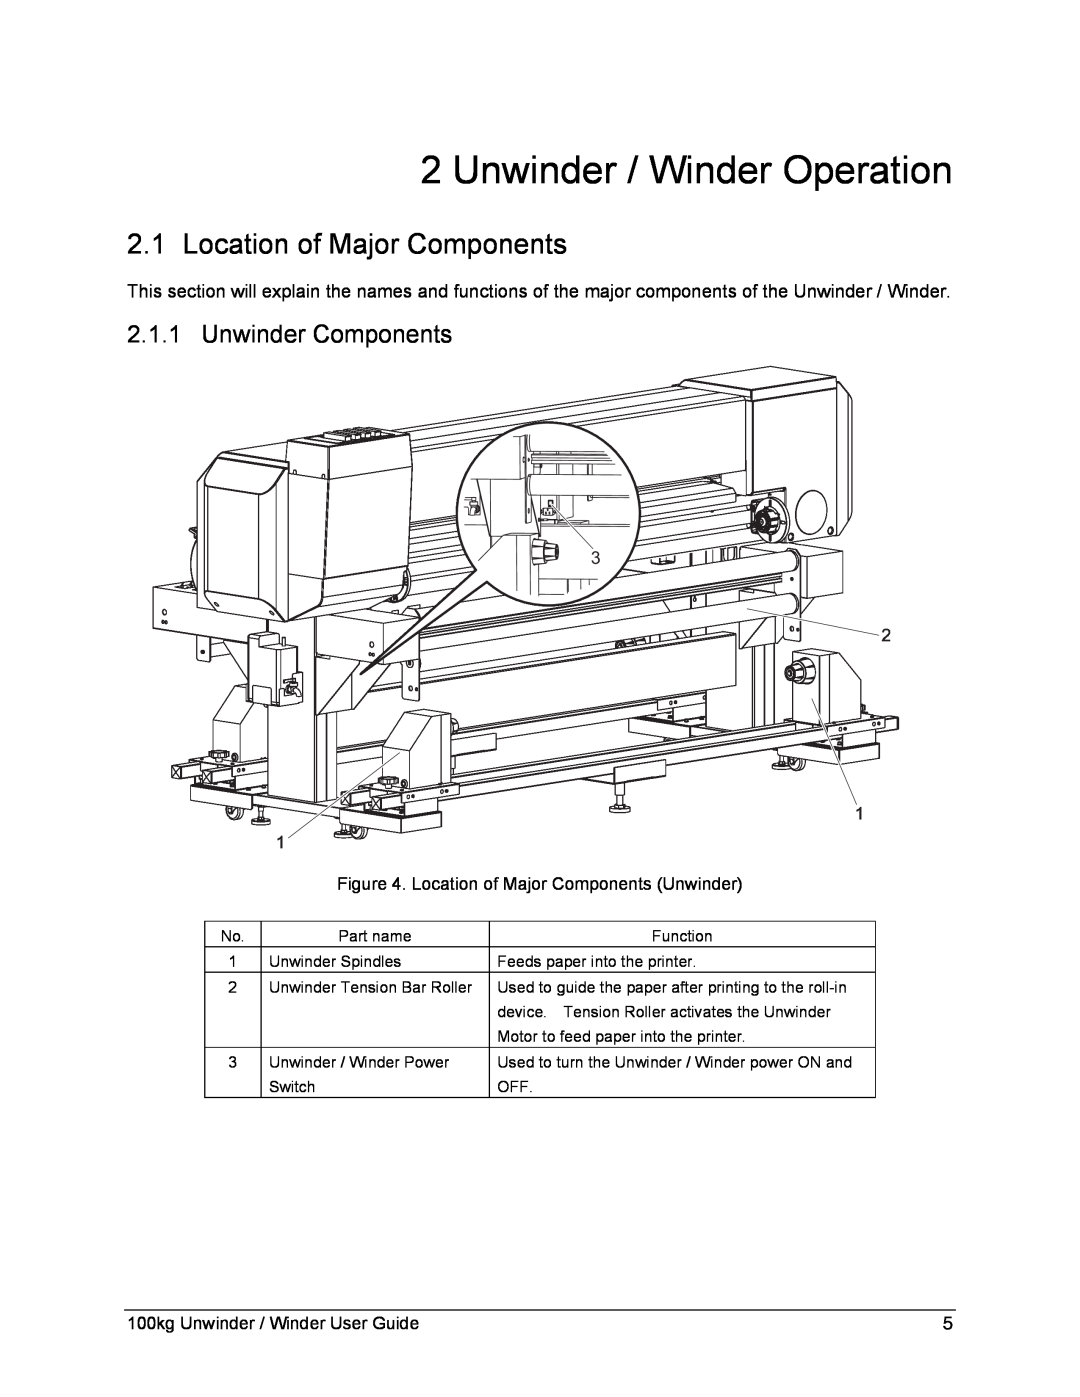 Xerox 8254E, 8264E manual Unwinder / Winder Operation, Location of Major Components, Unwinder Components, 3 2 